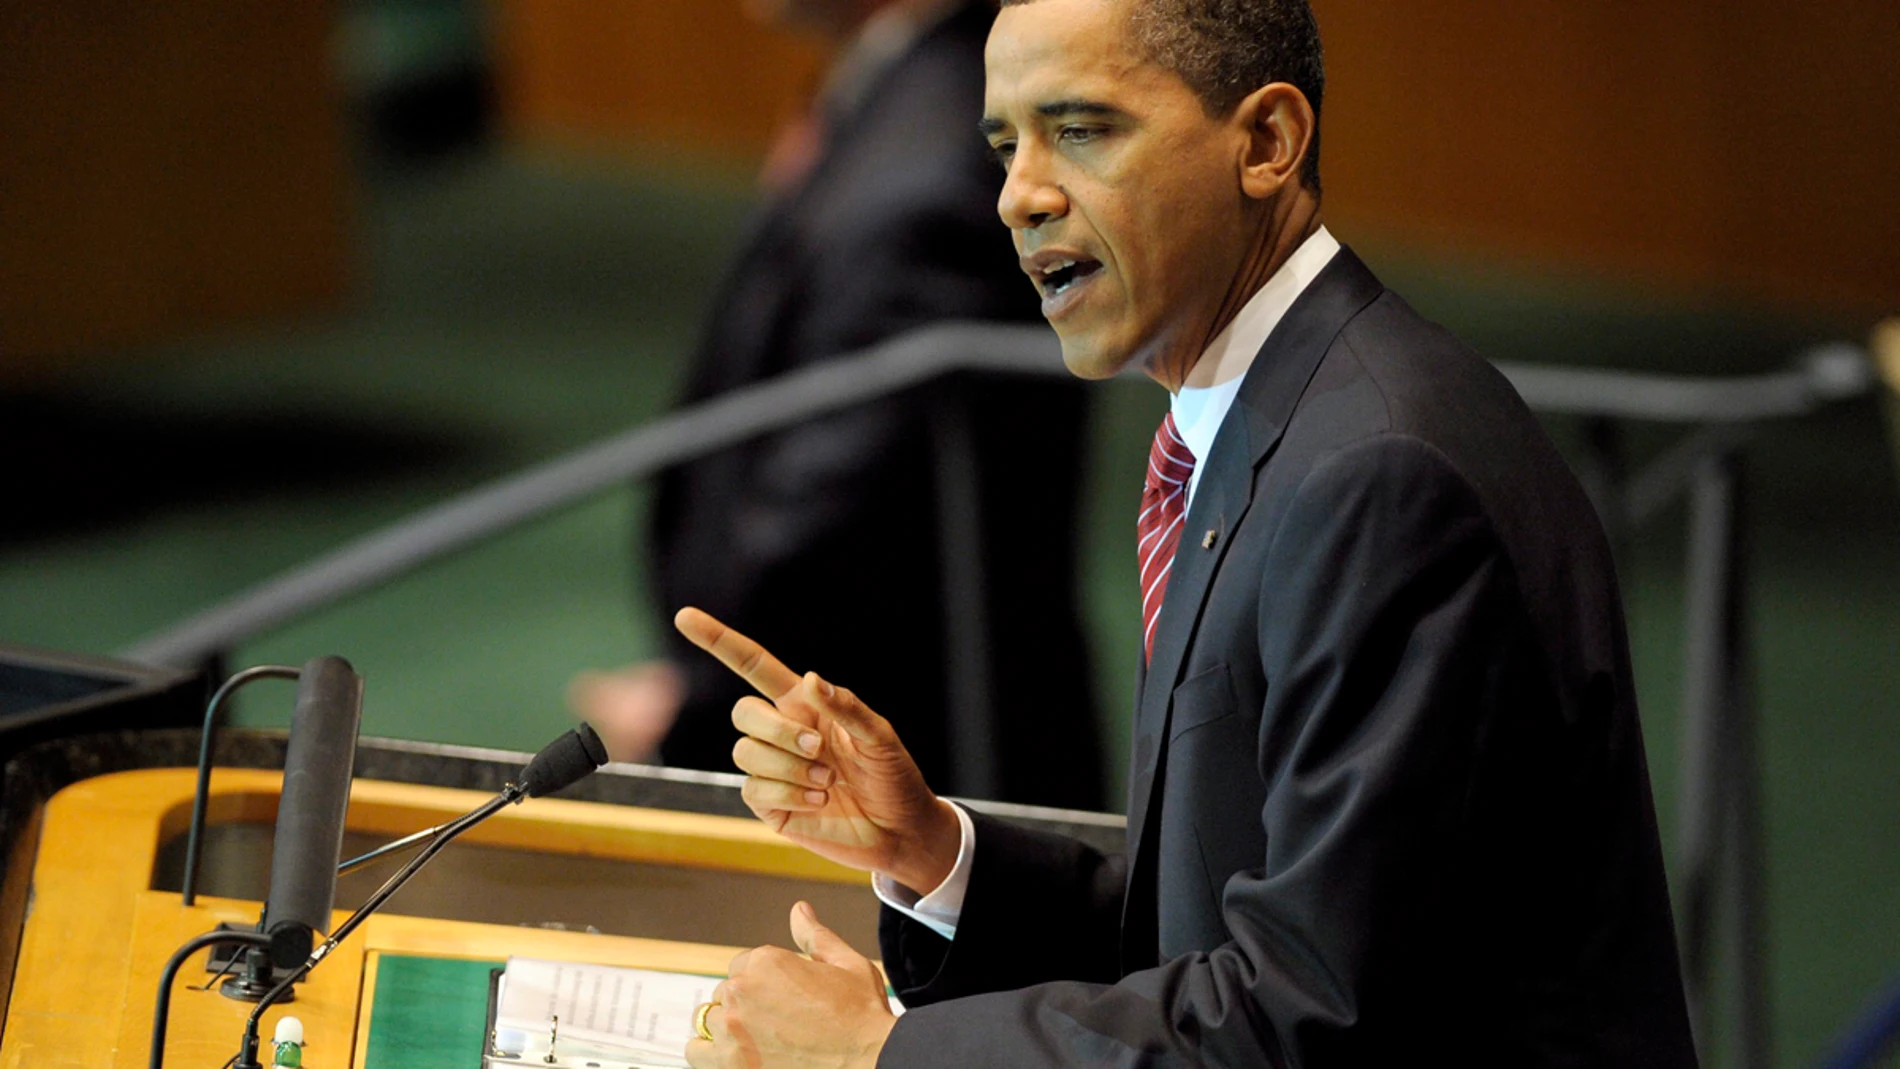 Obama en la Asamblea de la ONU